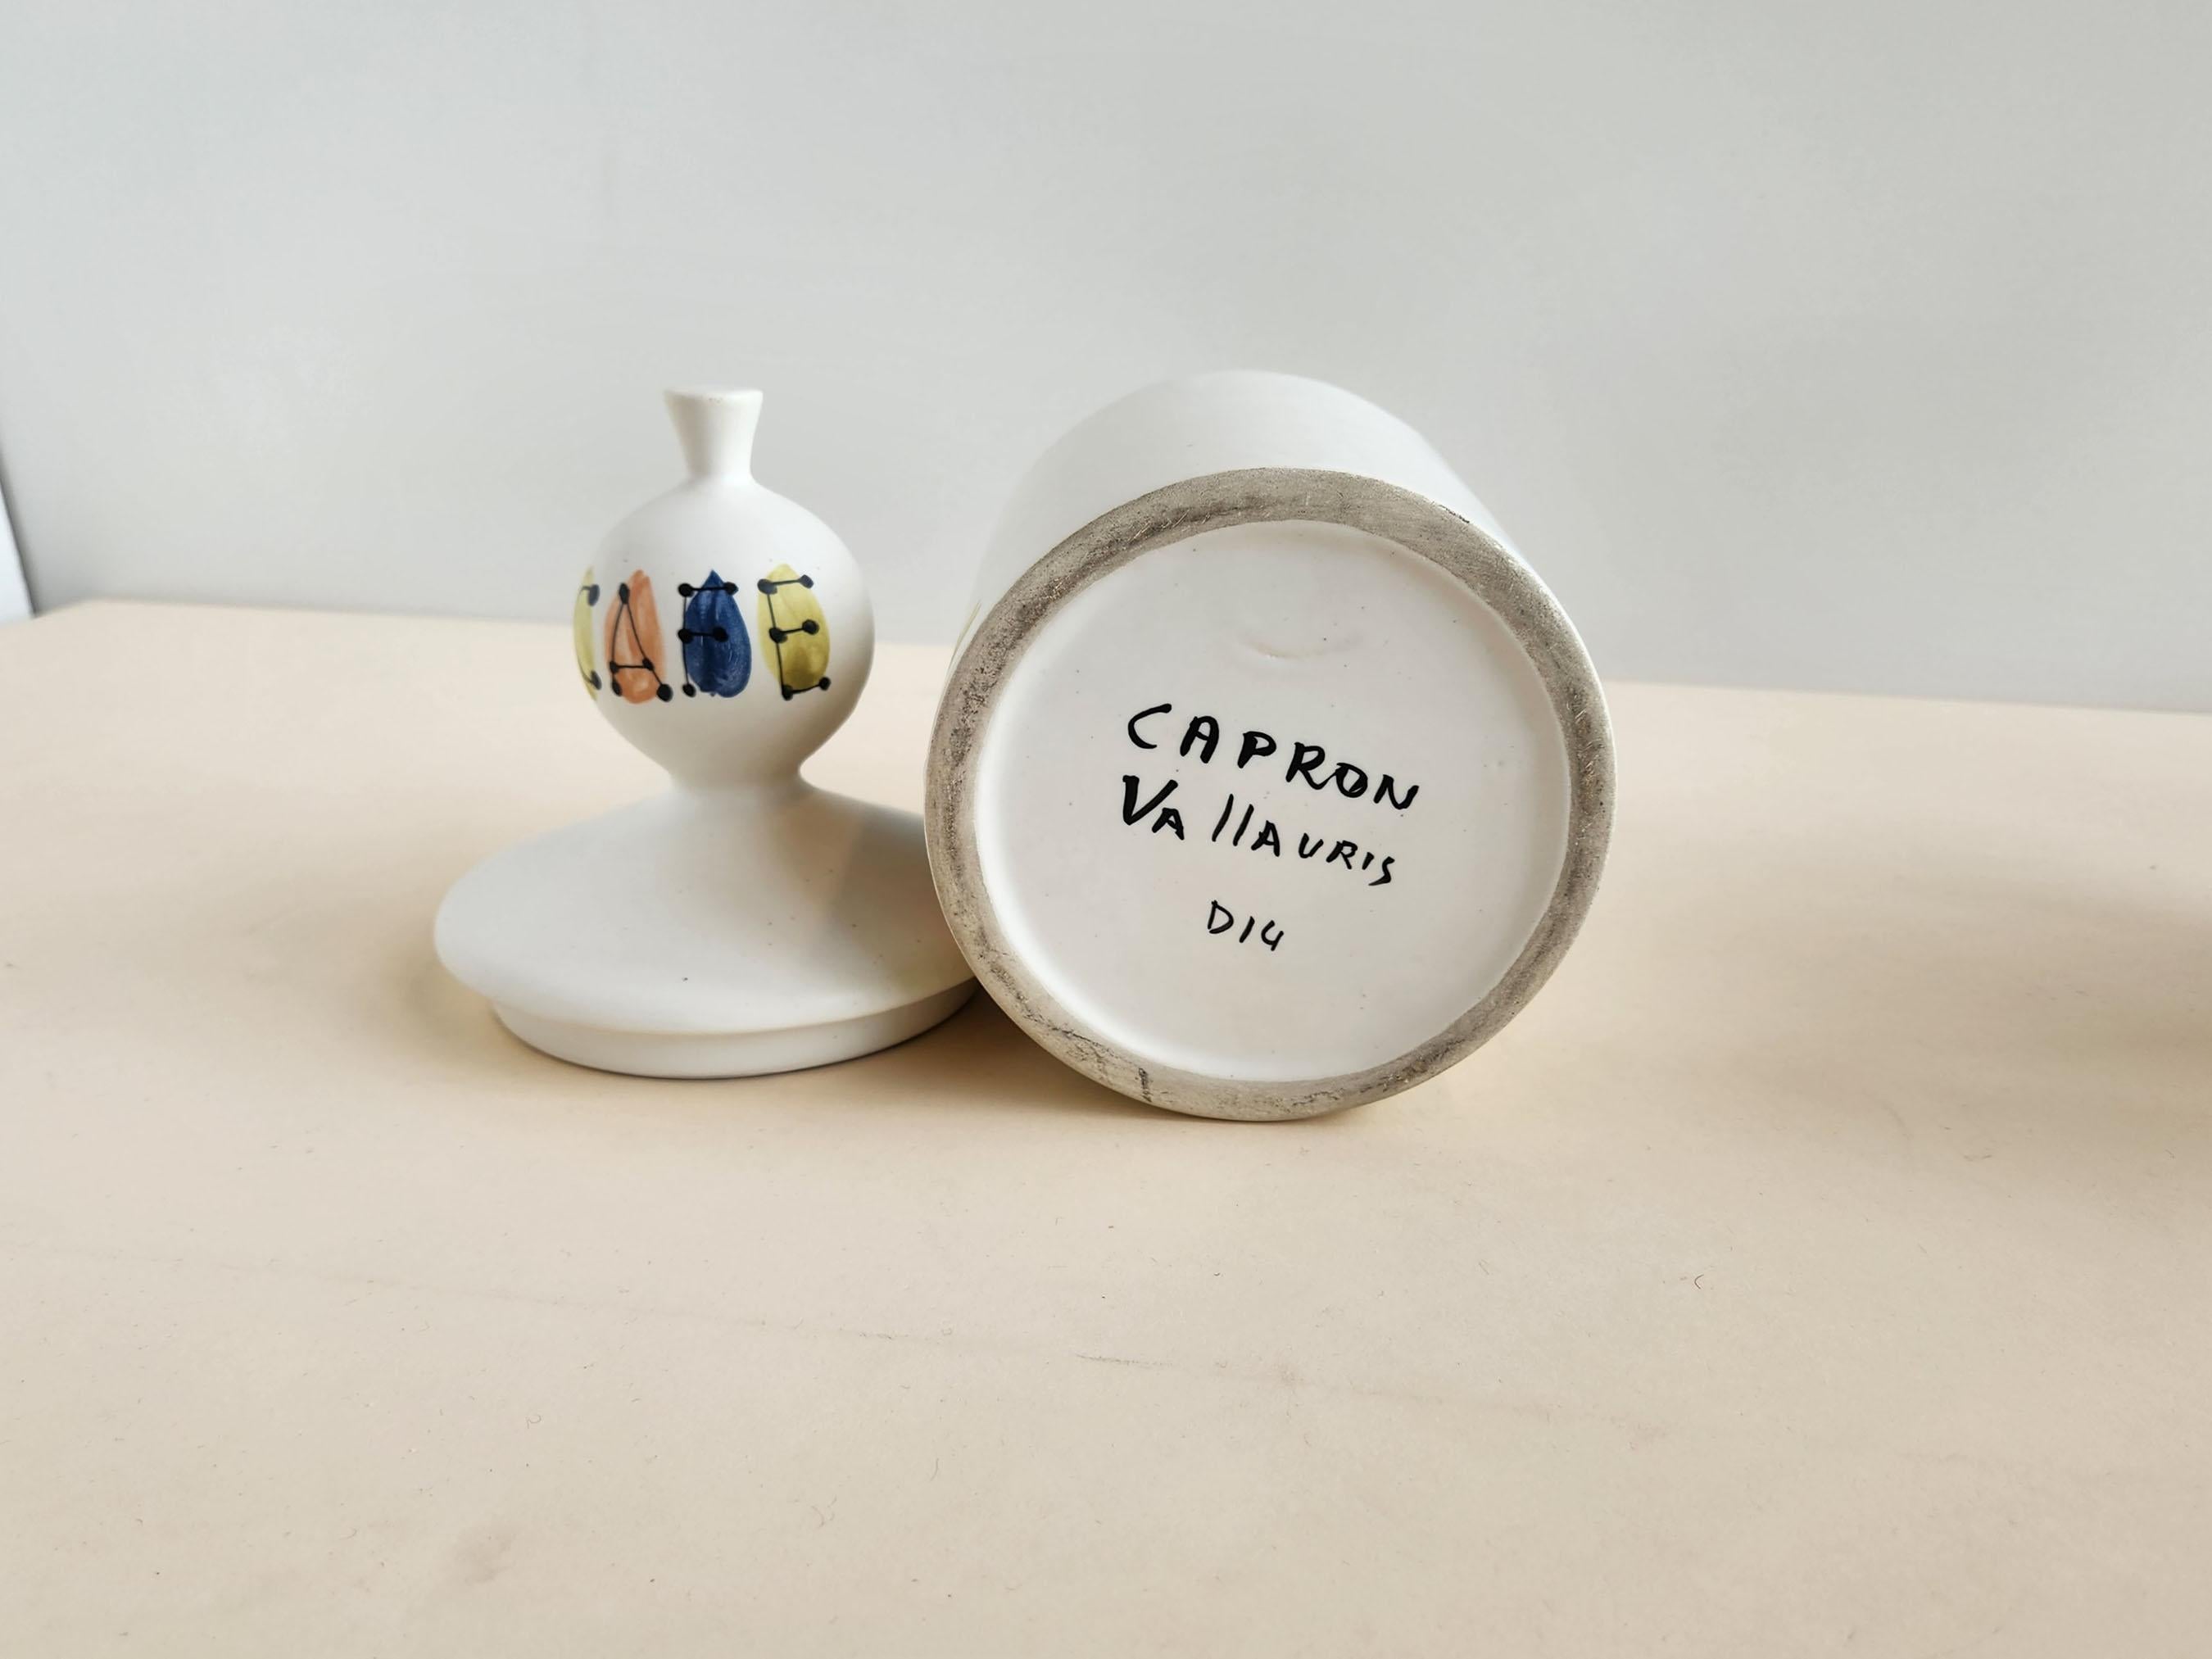 Roger Capron - Vintage Ceramic Coffee Jar with Lid For Sale 2